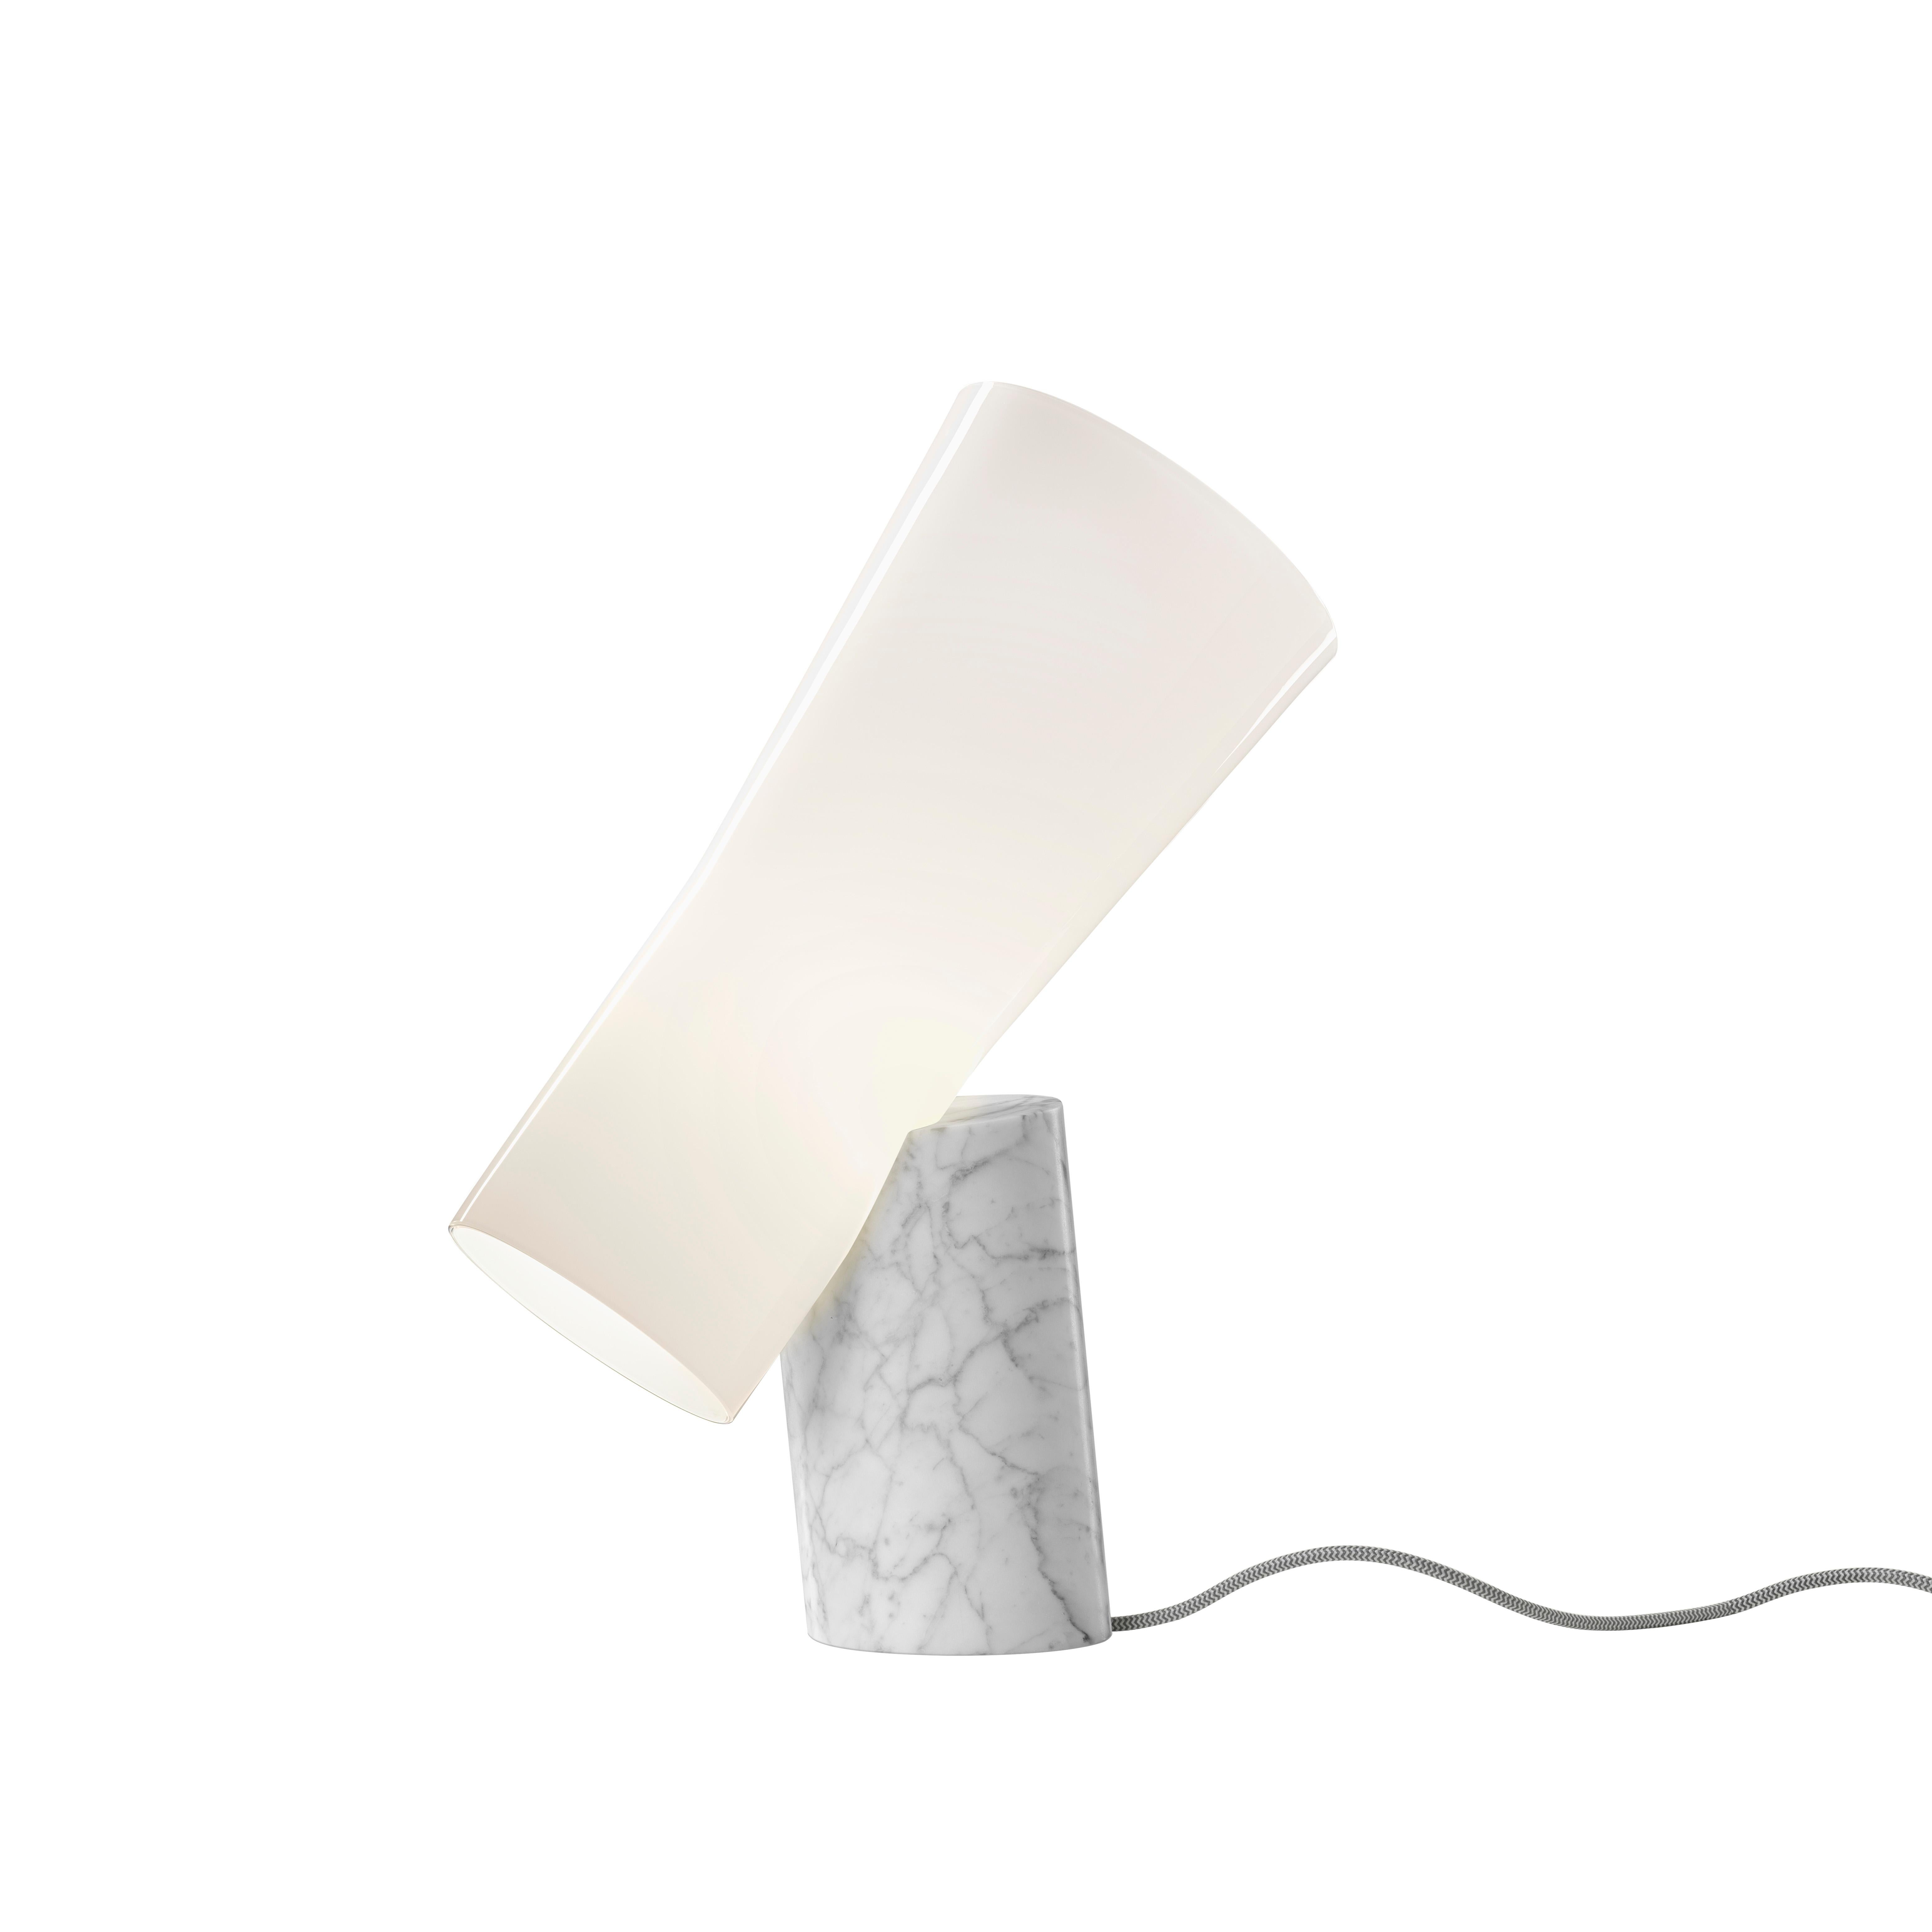 Foscarini Nile Table White Lamp by Rodolfo Dordoni In New Condition For Sale In Brooklyn, NY